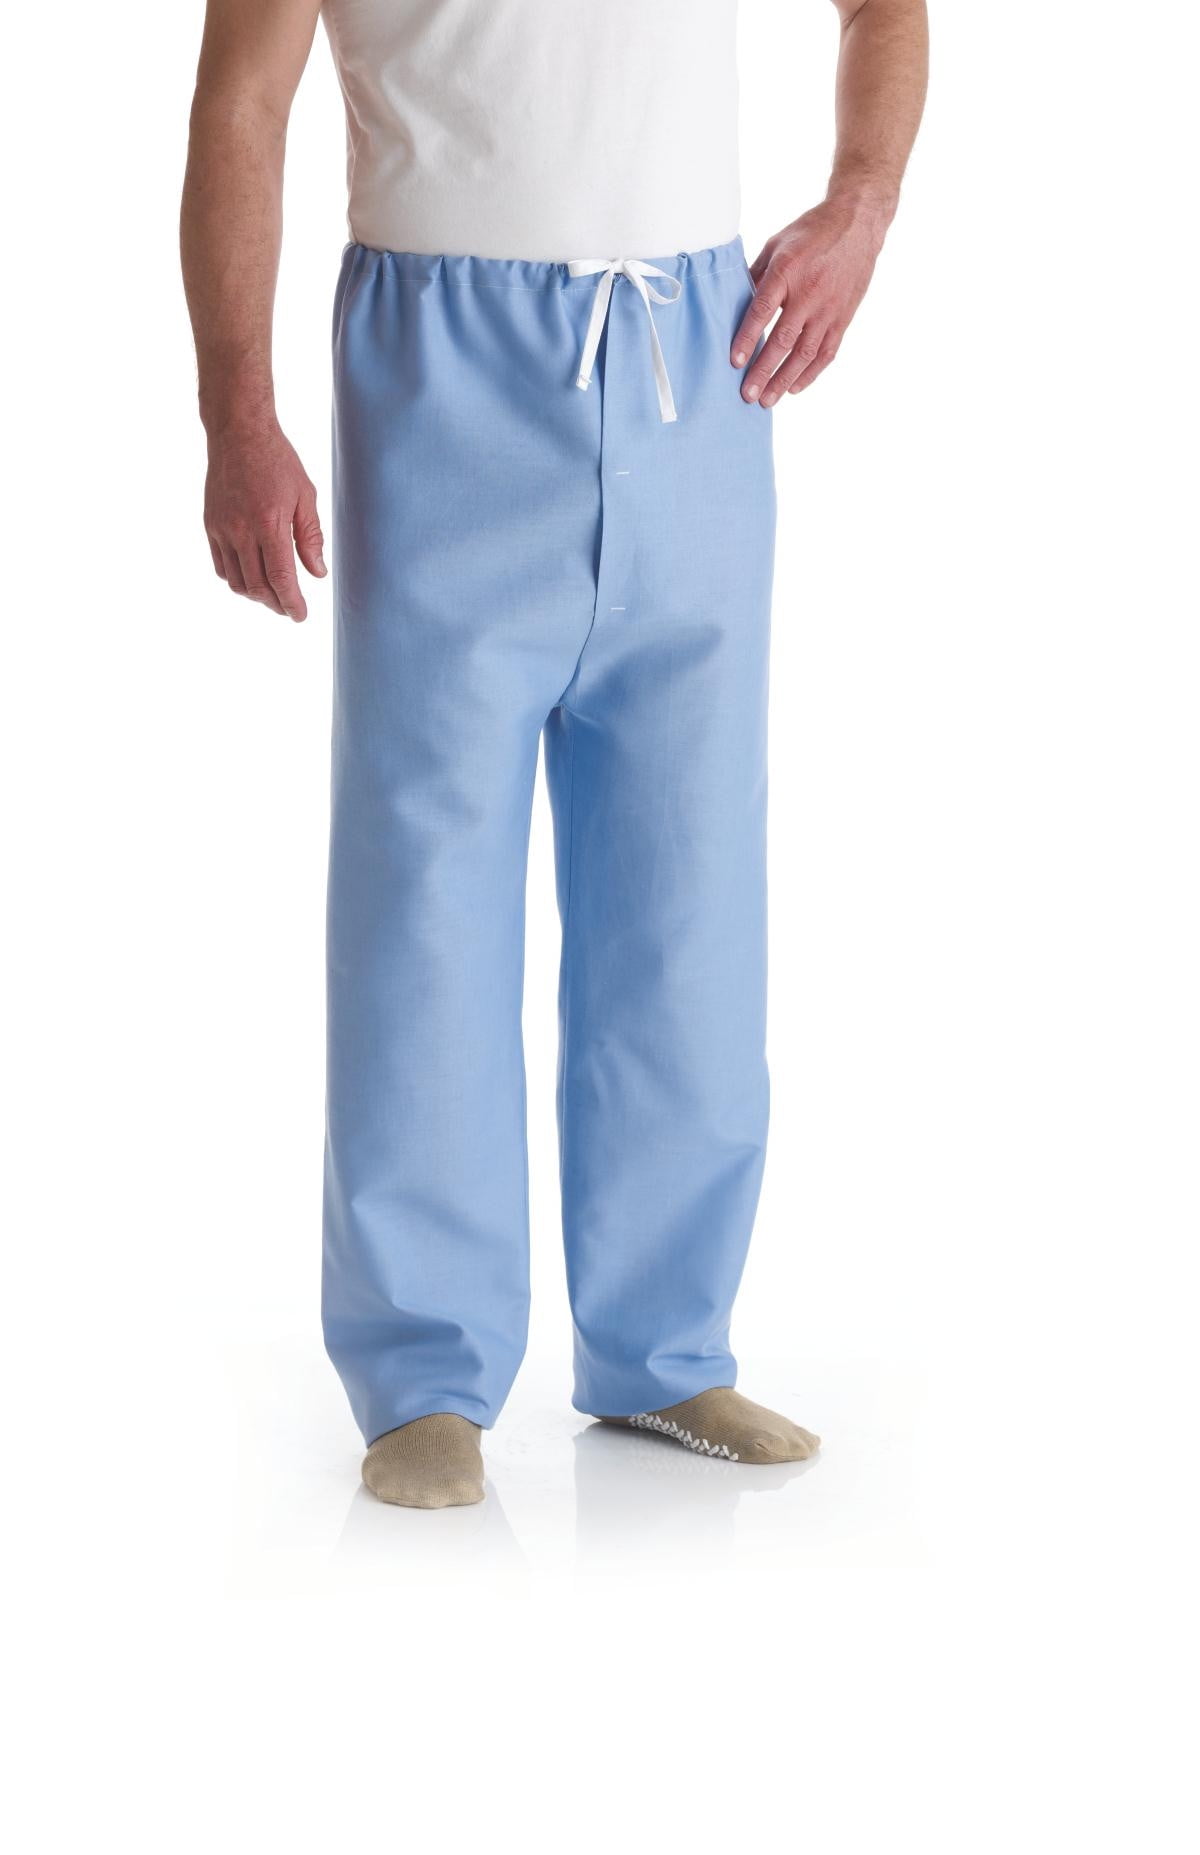 Drawstring Pants Solid Blue - Walmart.com